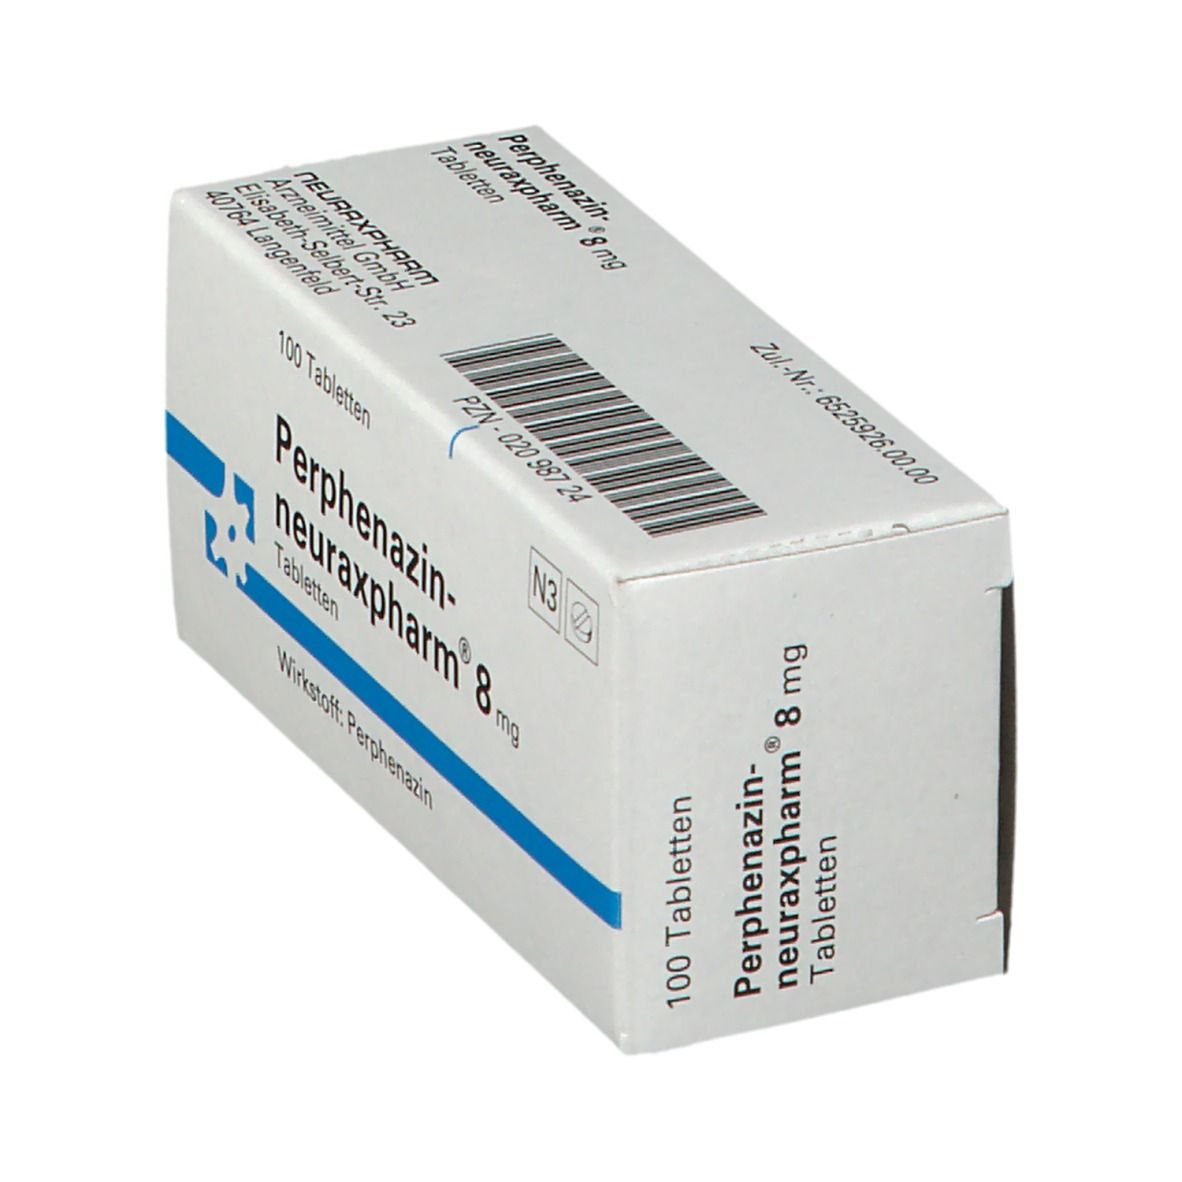 Perphenazin-neuraxpharm® 8 mg